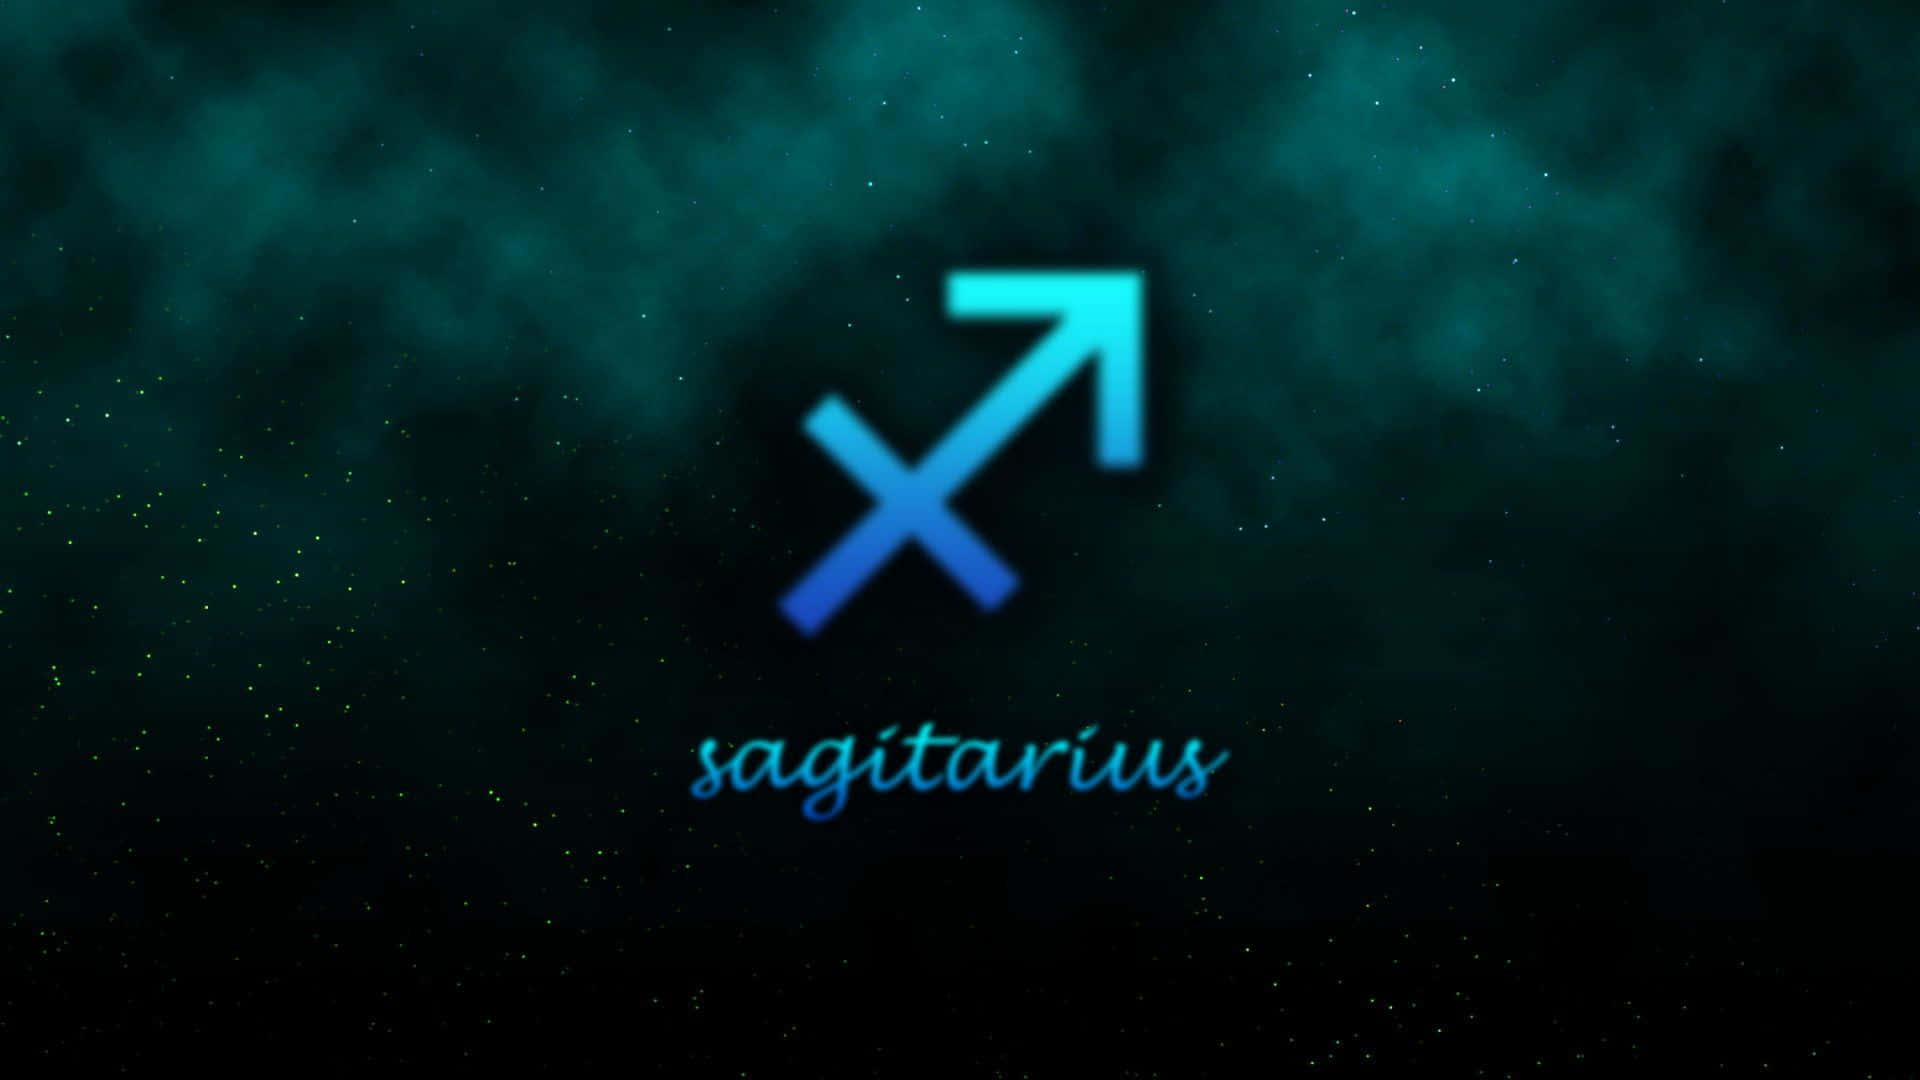 Stunning Visualization of Sagittarius Zodiac Sign